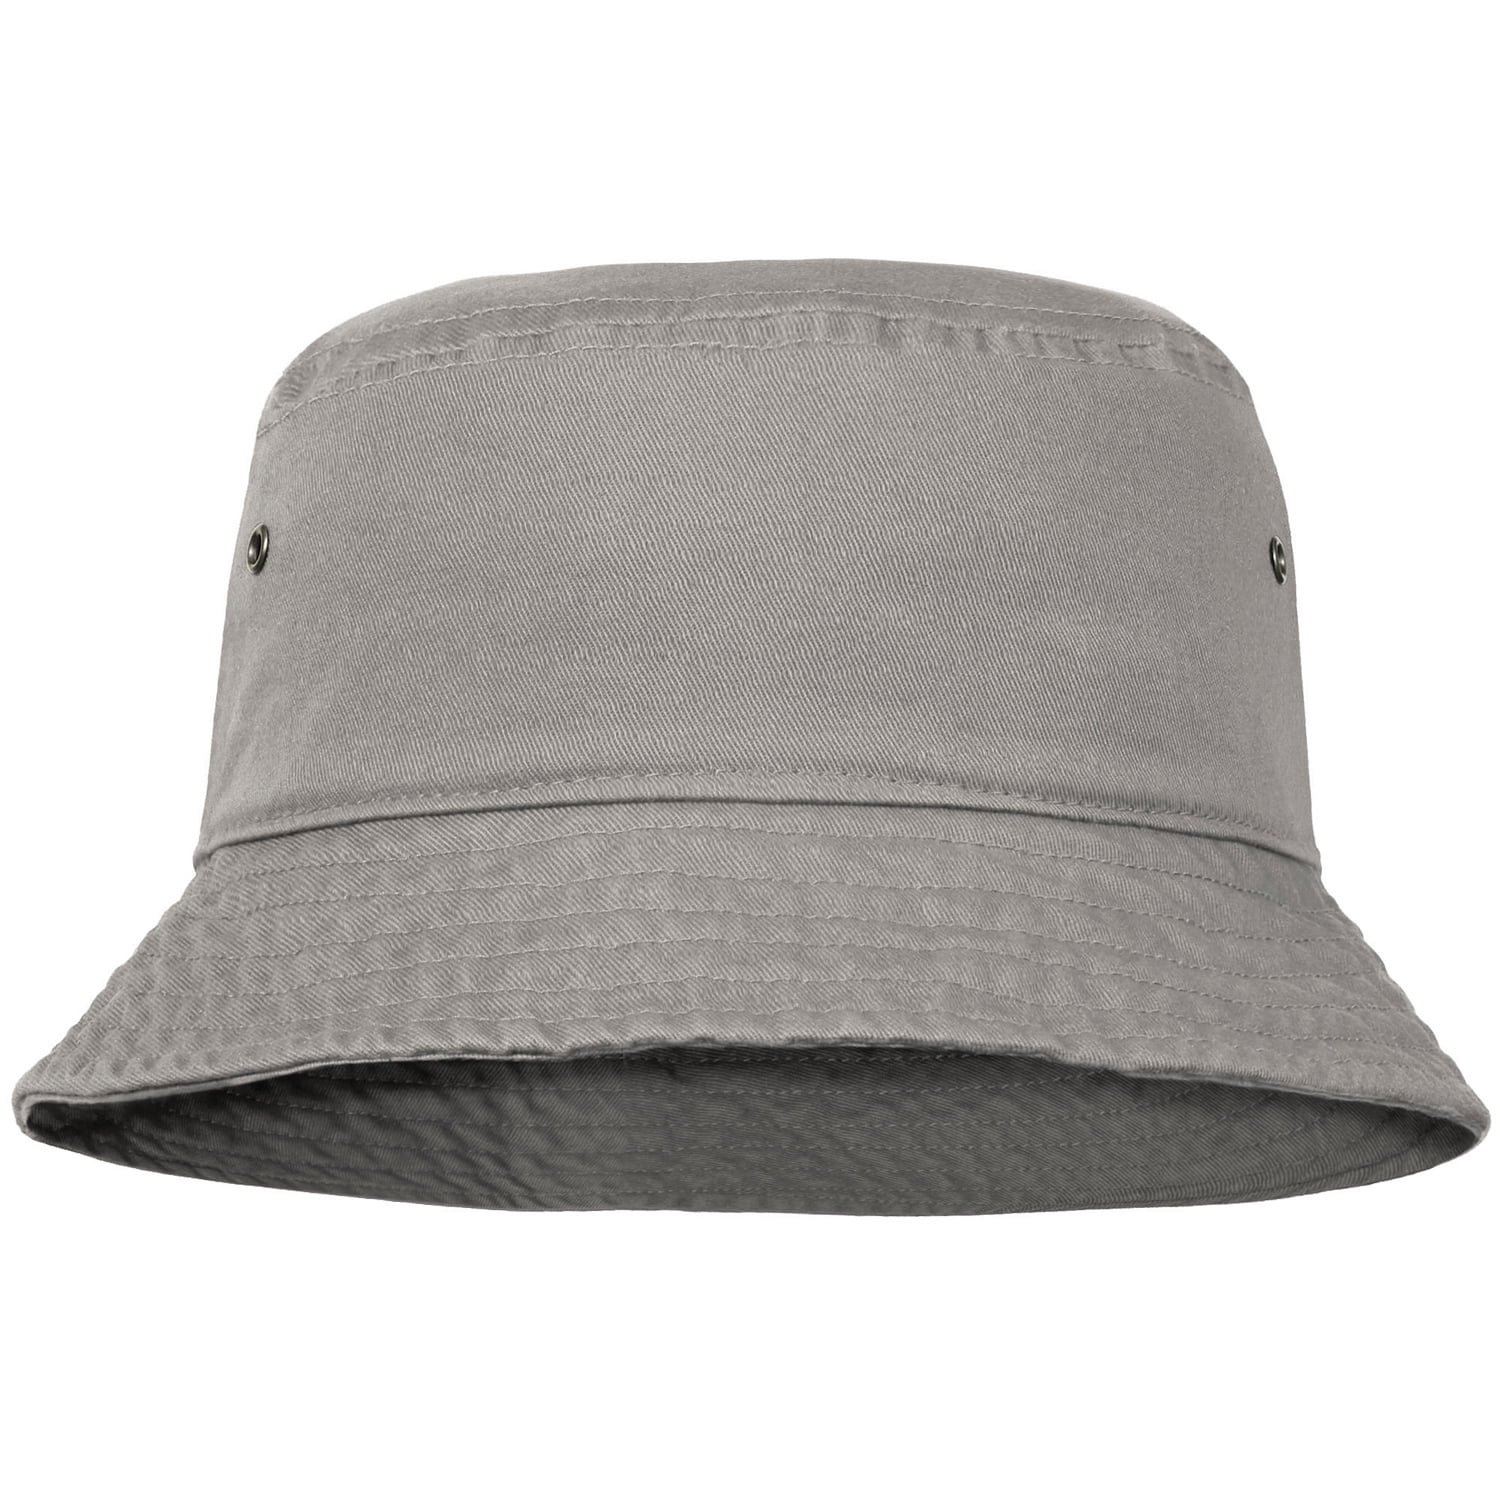 Bucket Hat for Men Women Unisex 100% Cotton Packable Foldable Summer Travel  Beach Outdoor Fishing Hat - LXL Purple Camouflage 